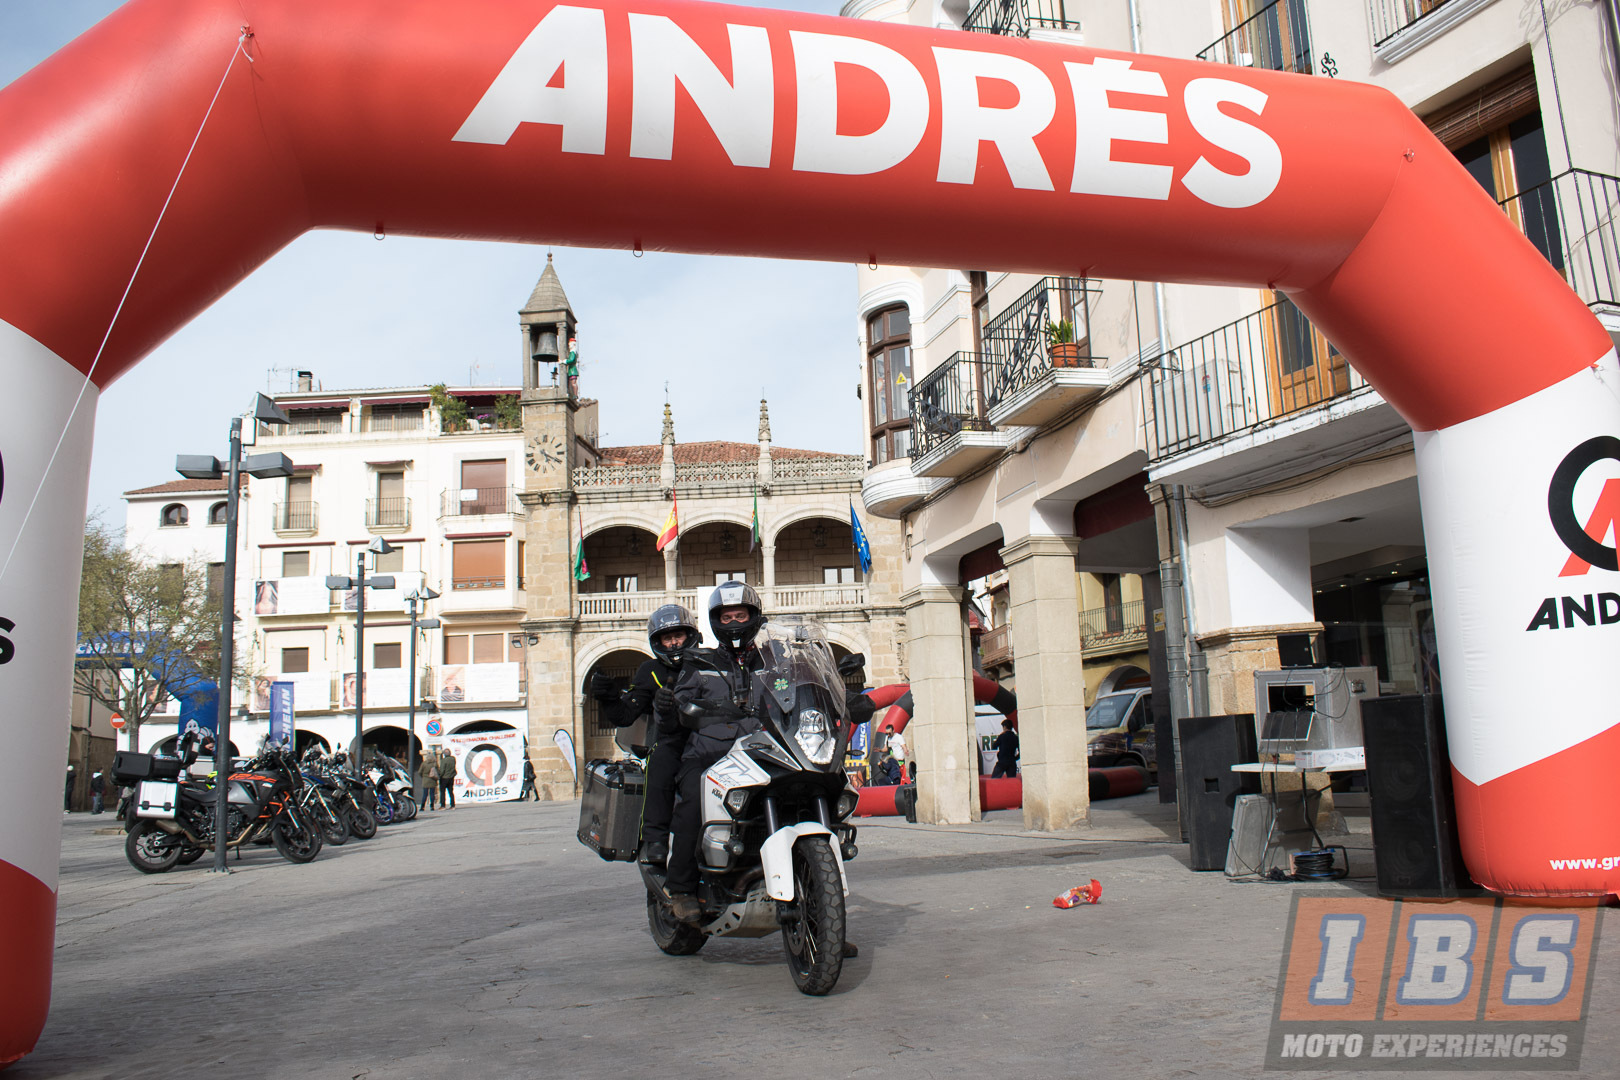 IBS Moto Experience (I Bike Spain)